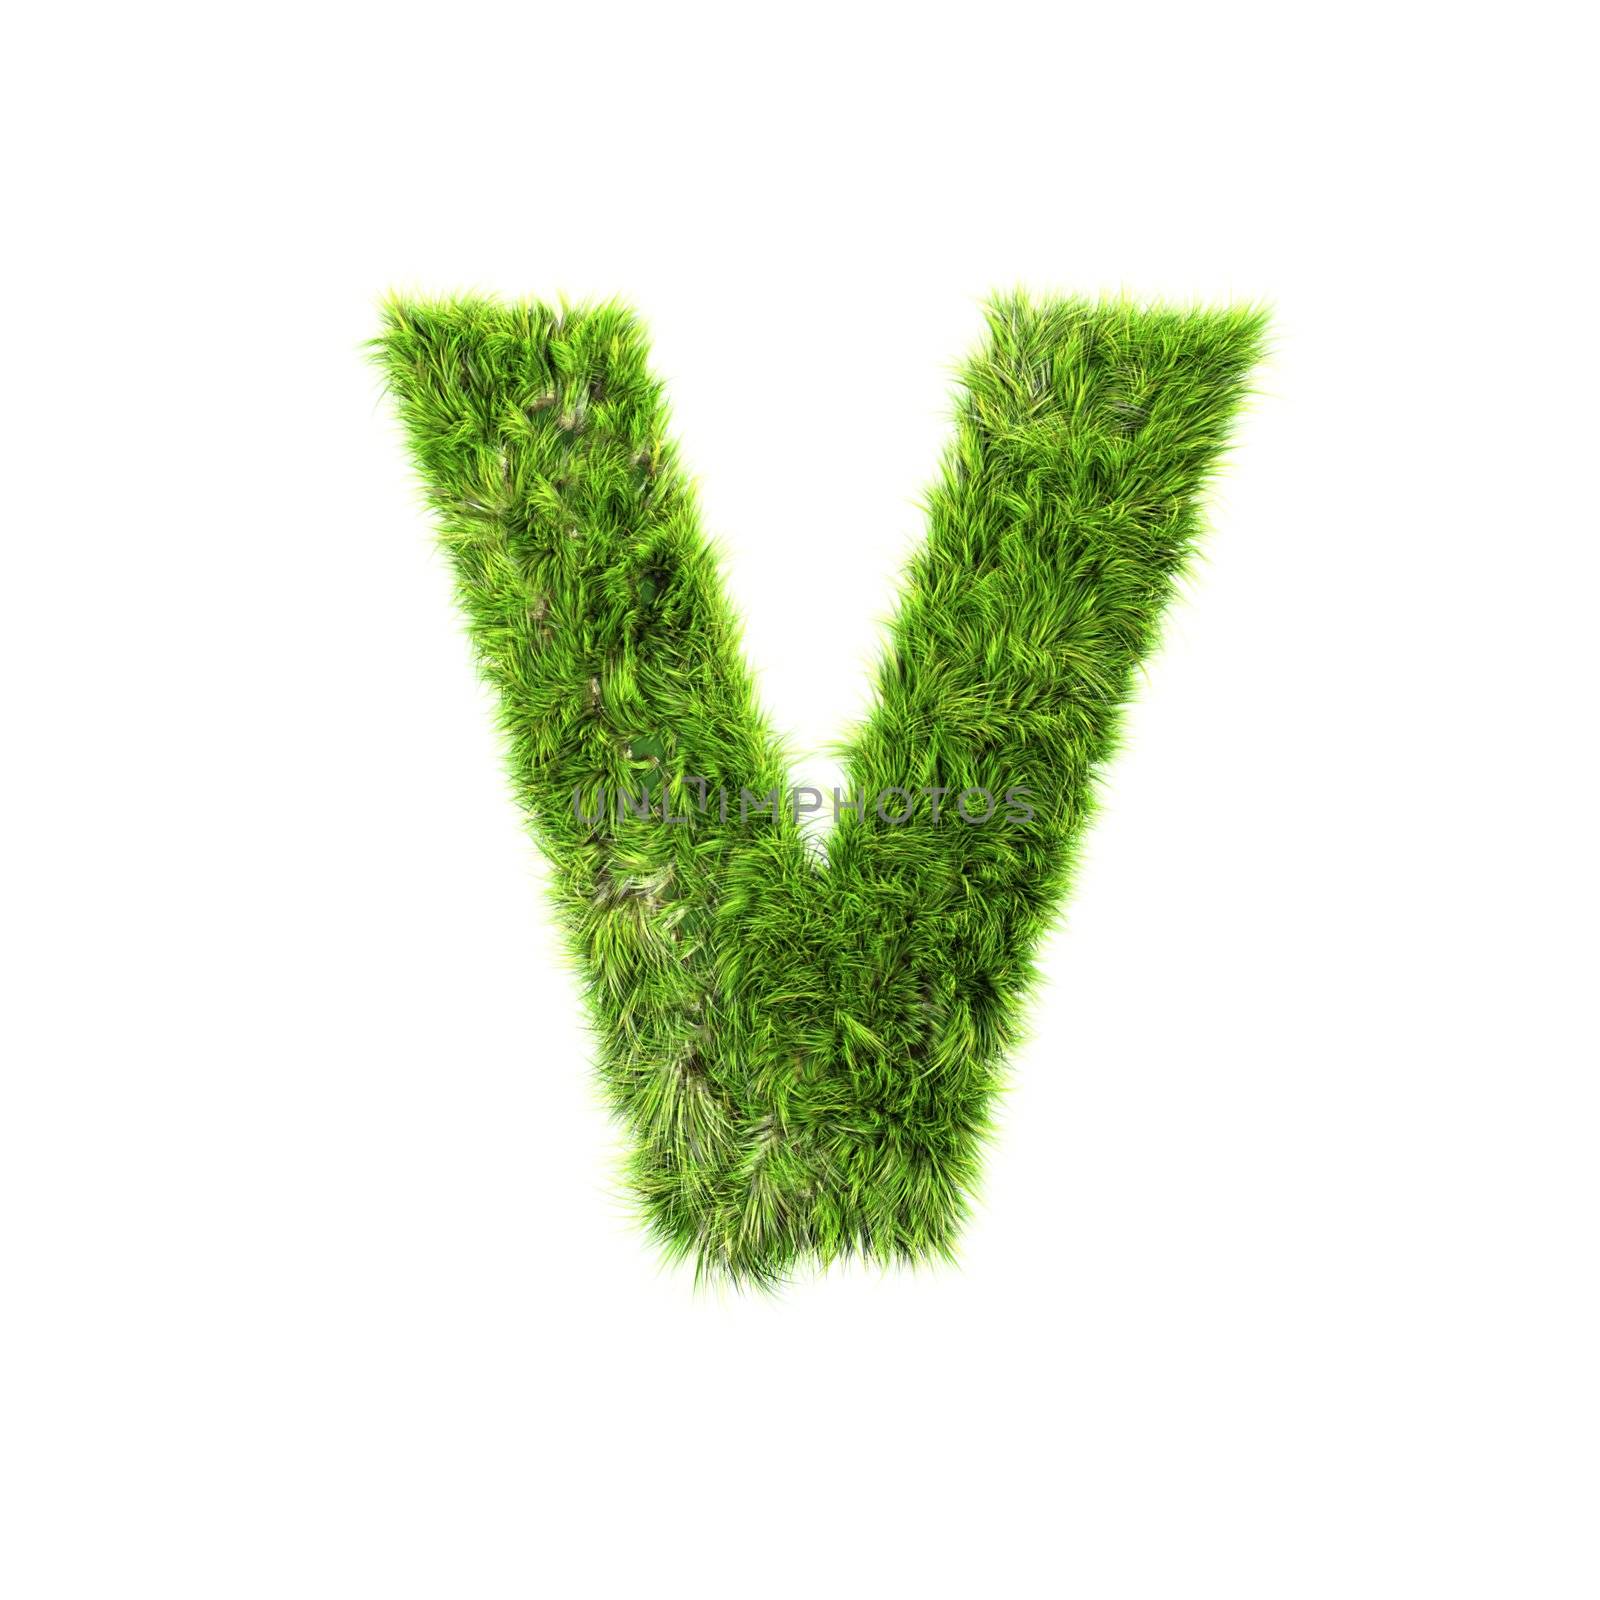 3d grass letter isolated on white background - V by chrisroll